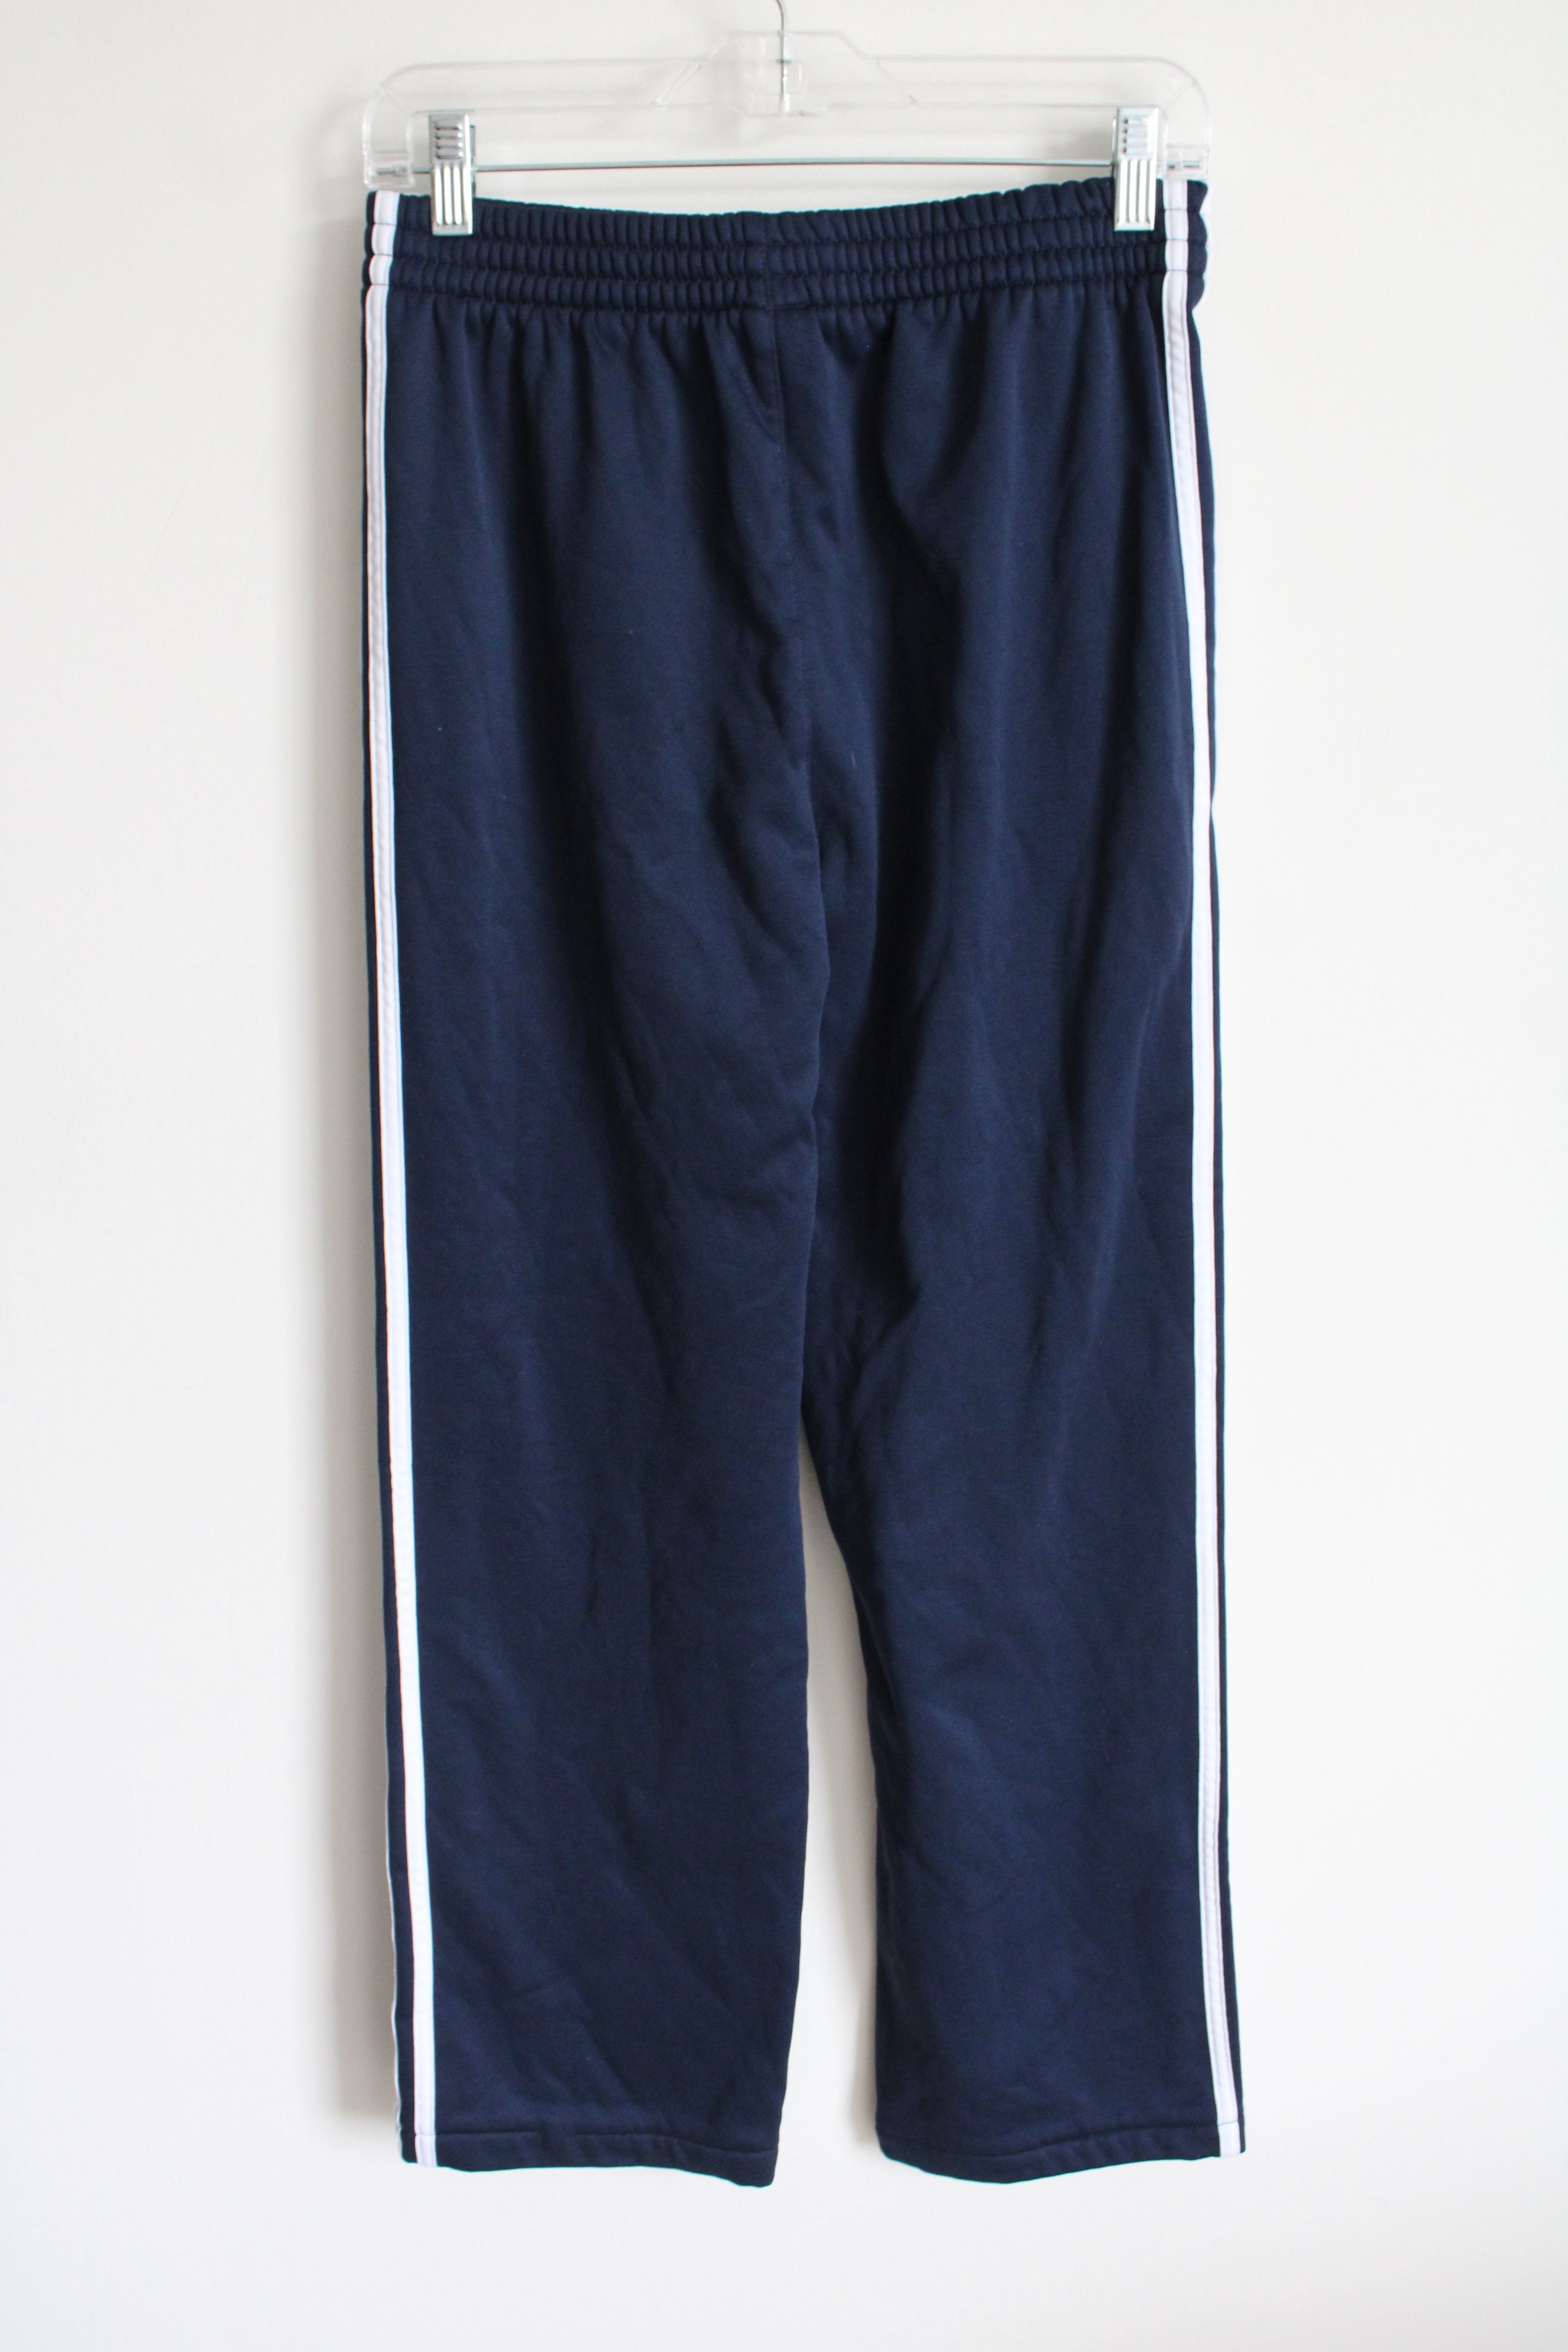 Adidas Navy Blue Pant | Youth XL (18/20)